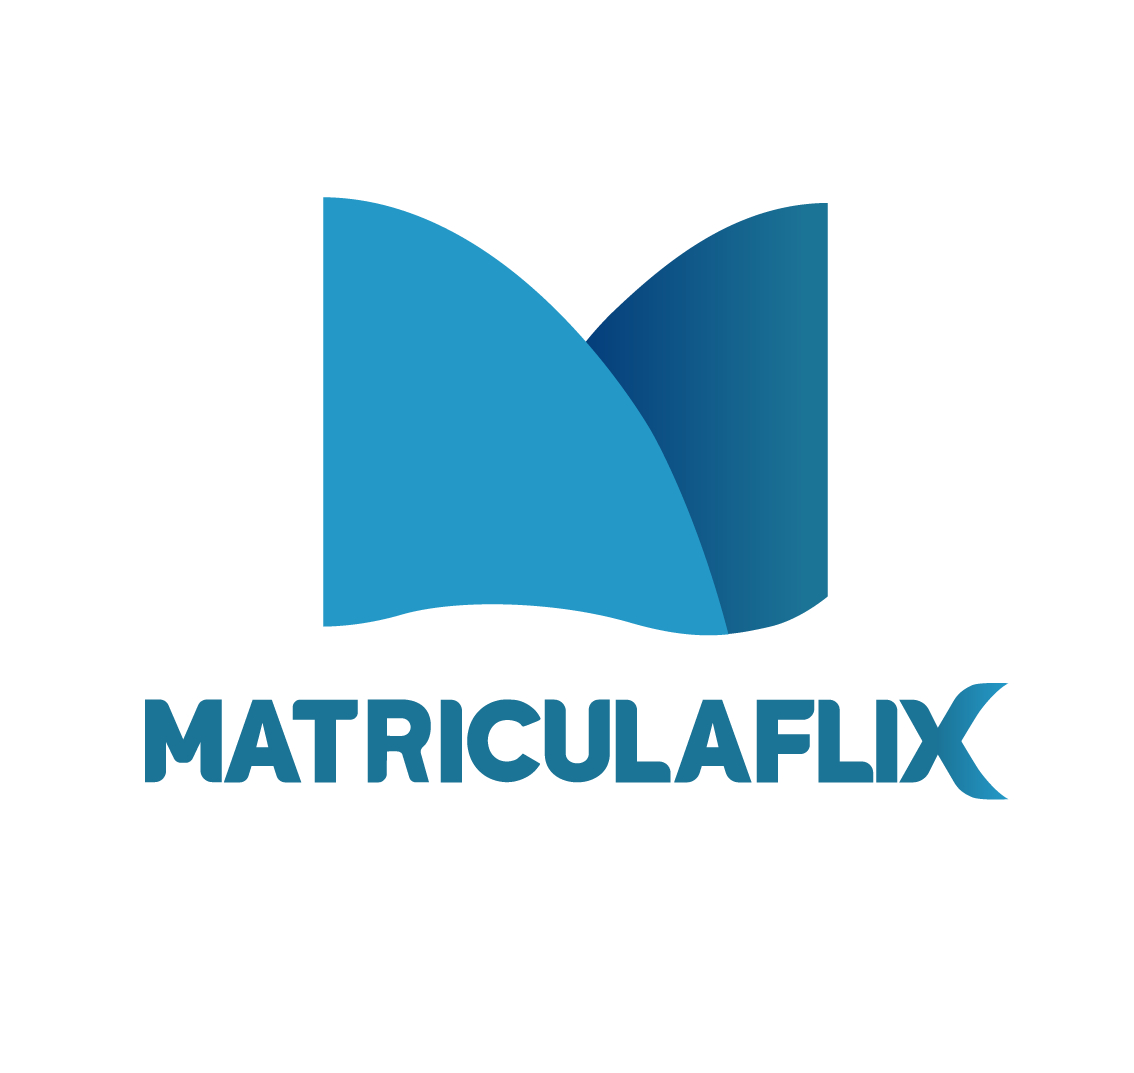 Matriculaflix